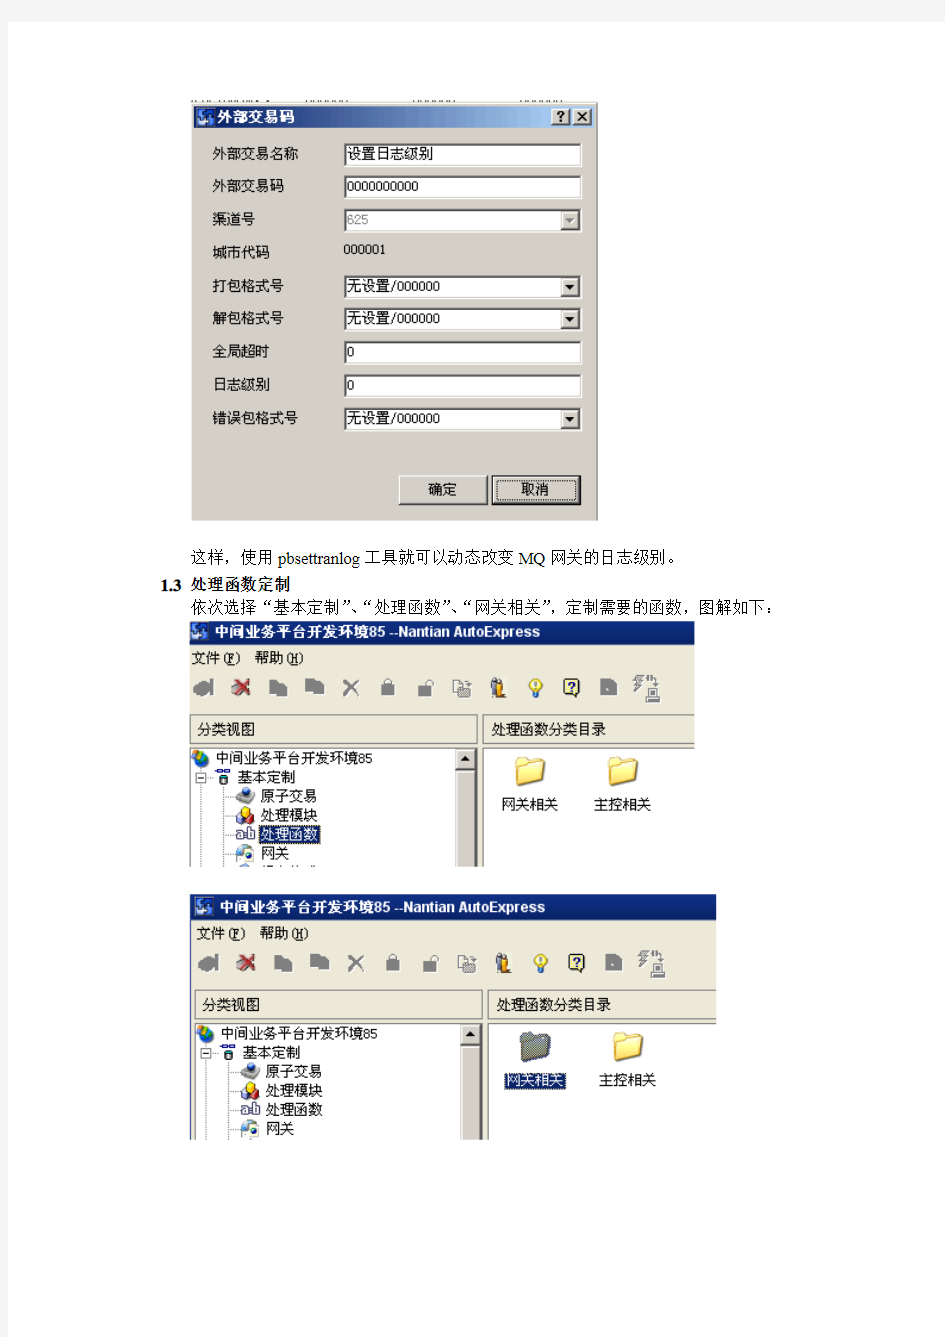 MQ网关优化操作手册v1.2